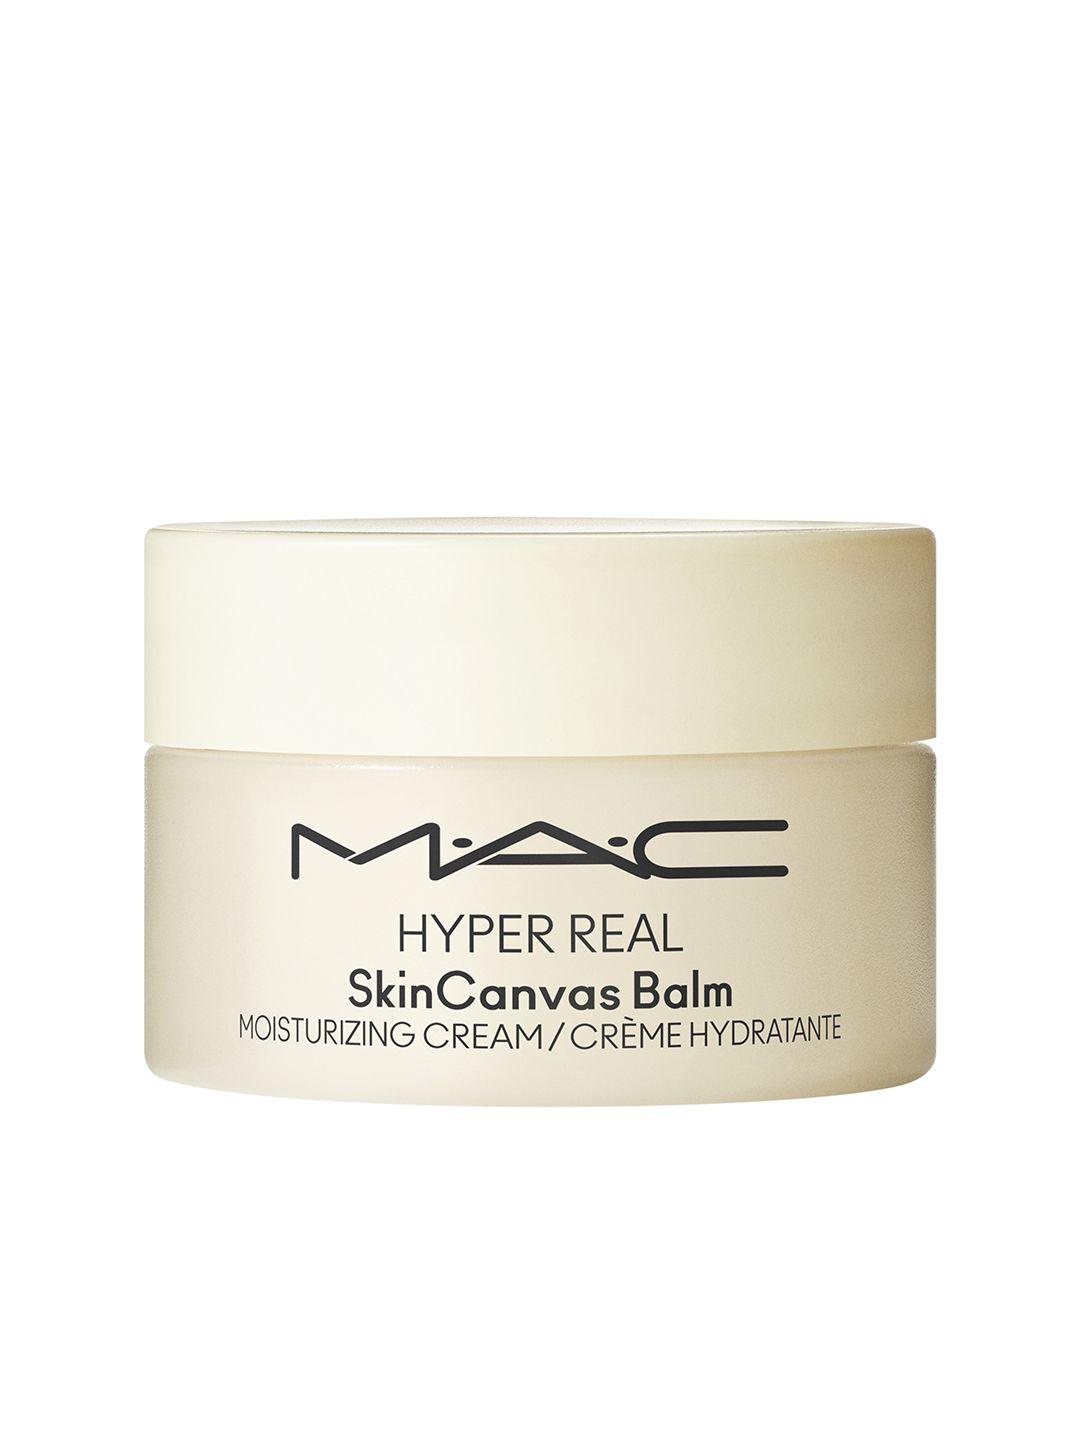 m.a.c hyper real skin canvas balm moisturizing cream - 15 ml